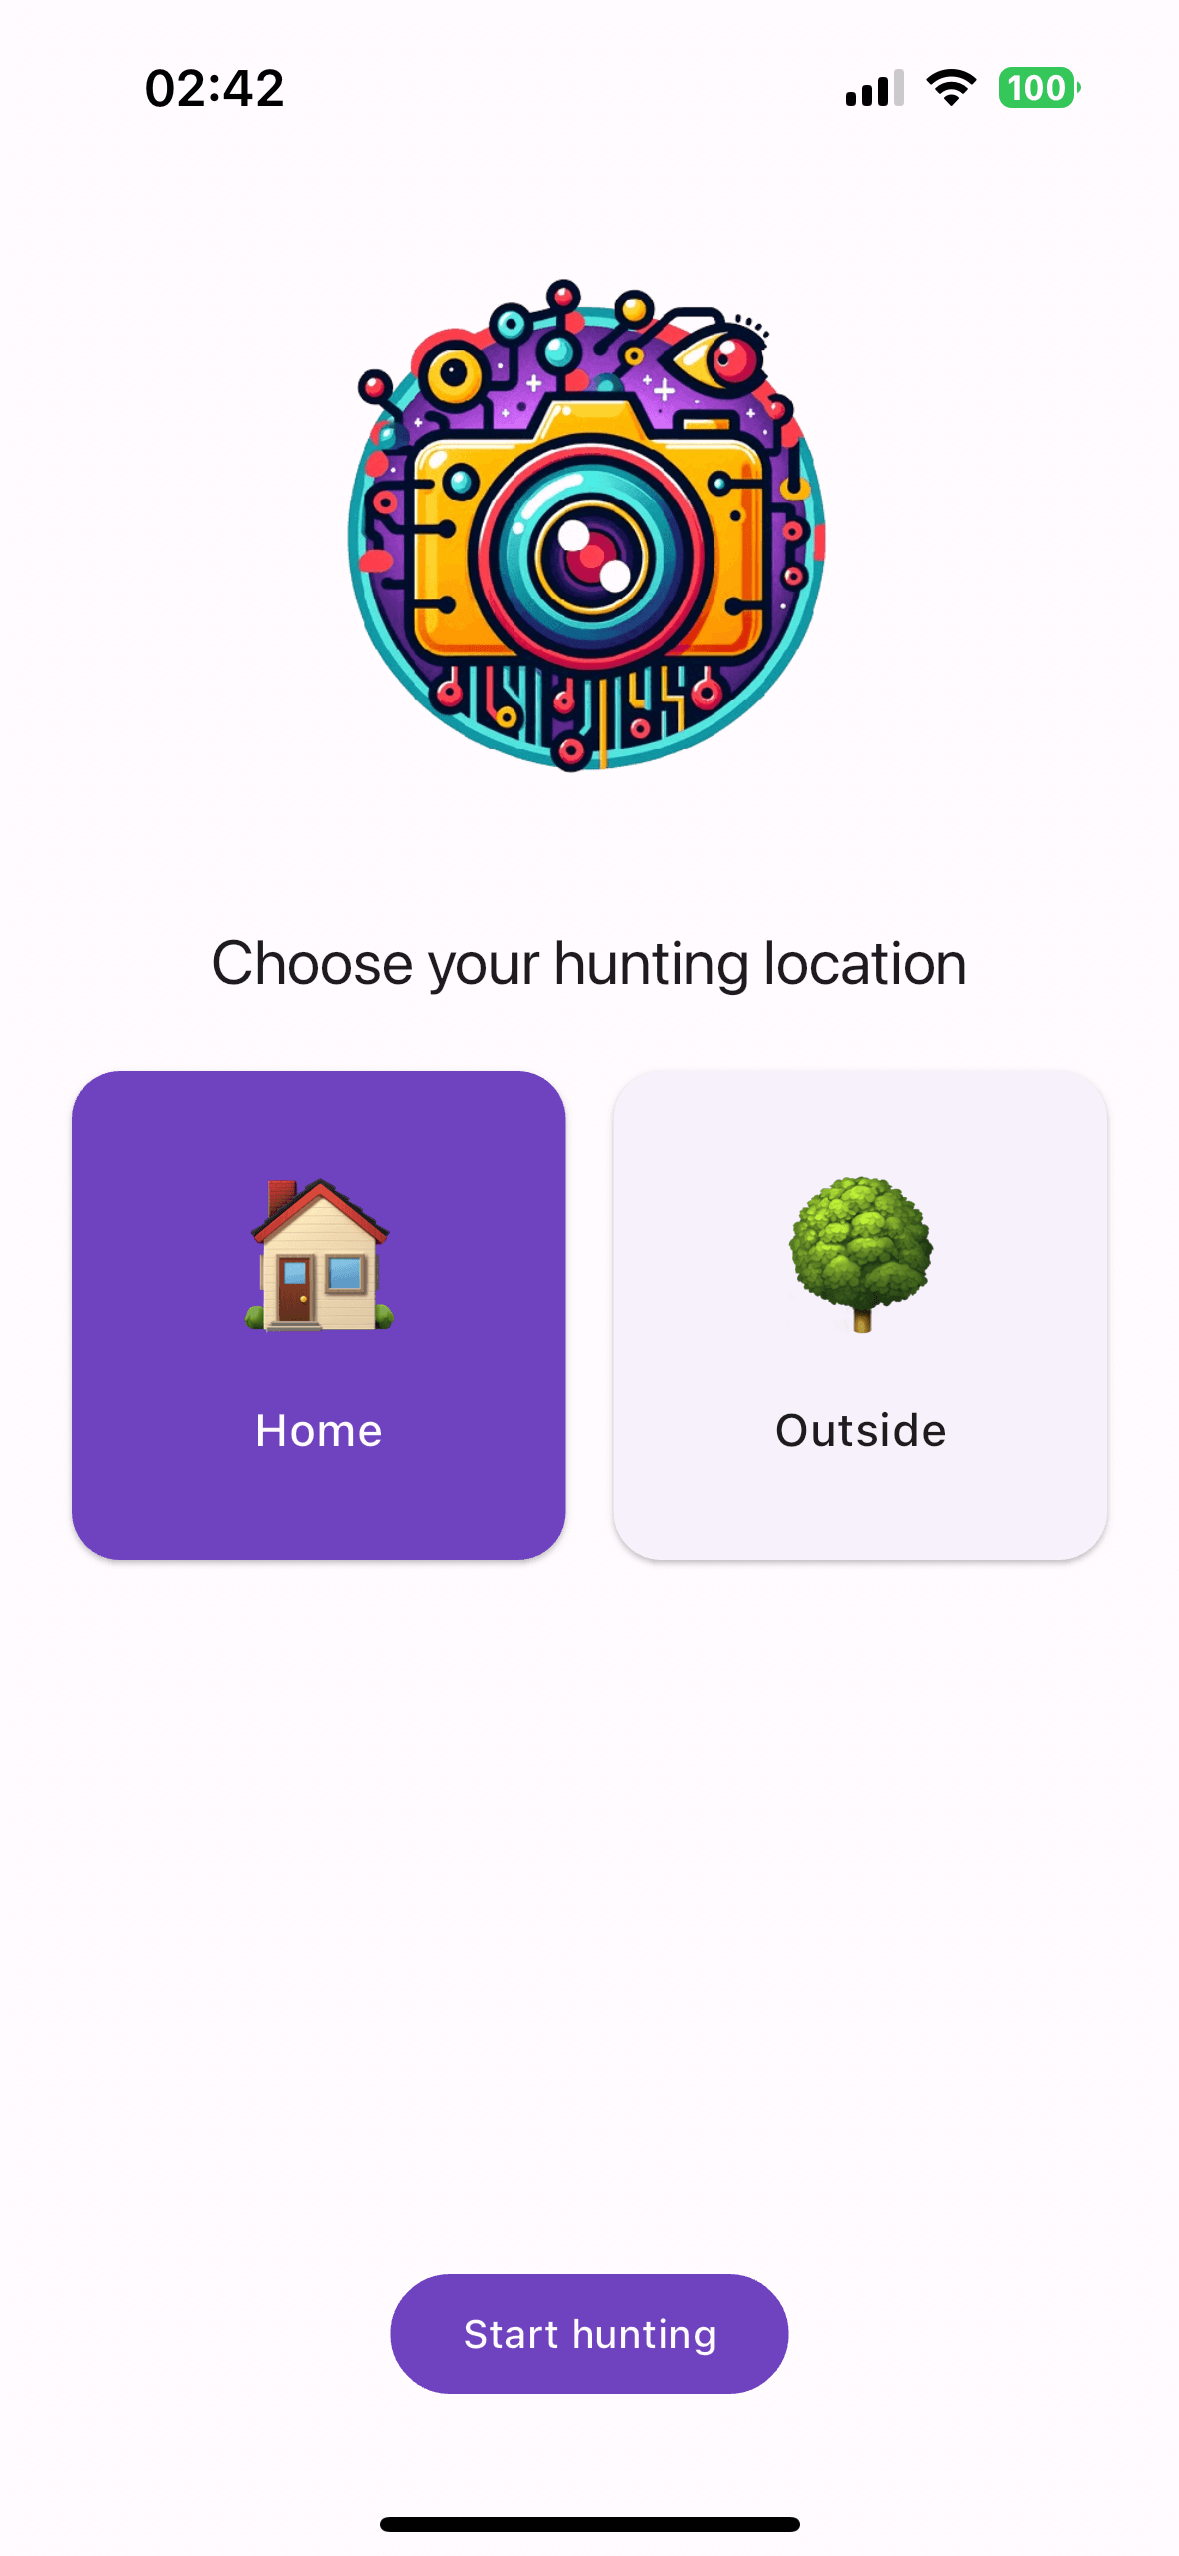 Scavenger hunt location selection